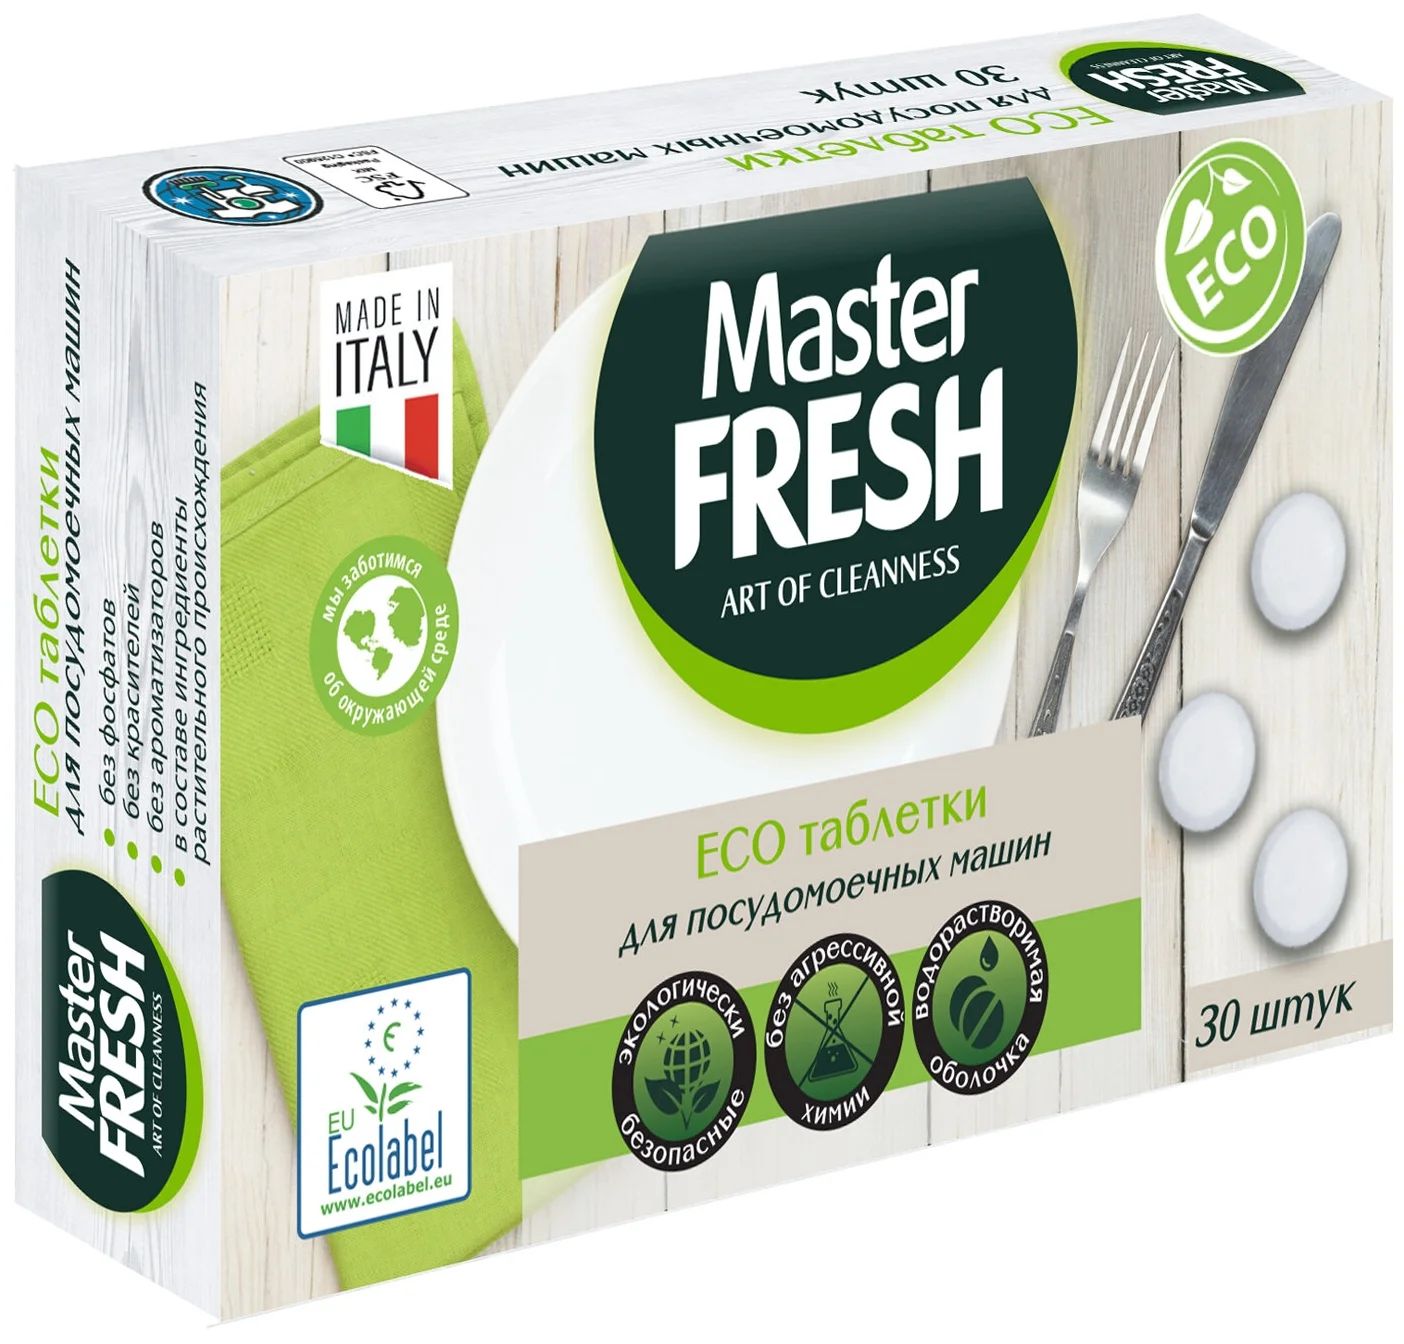 Master FRESH Eco - особенности: биоразлагаемое, растворимая оболочка